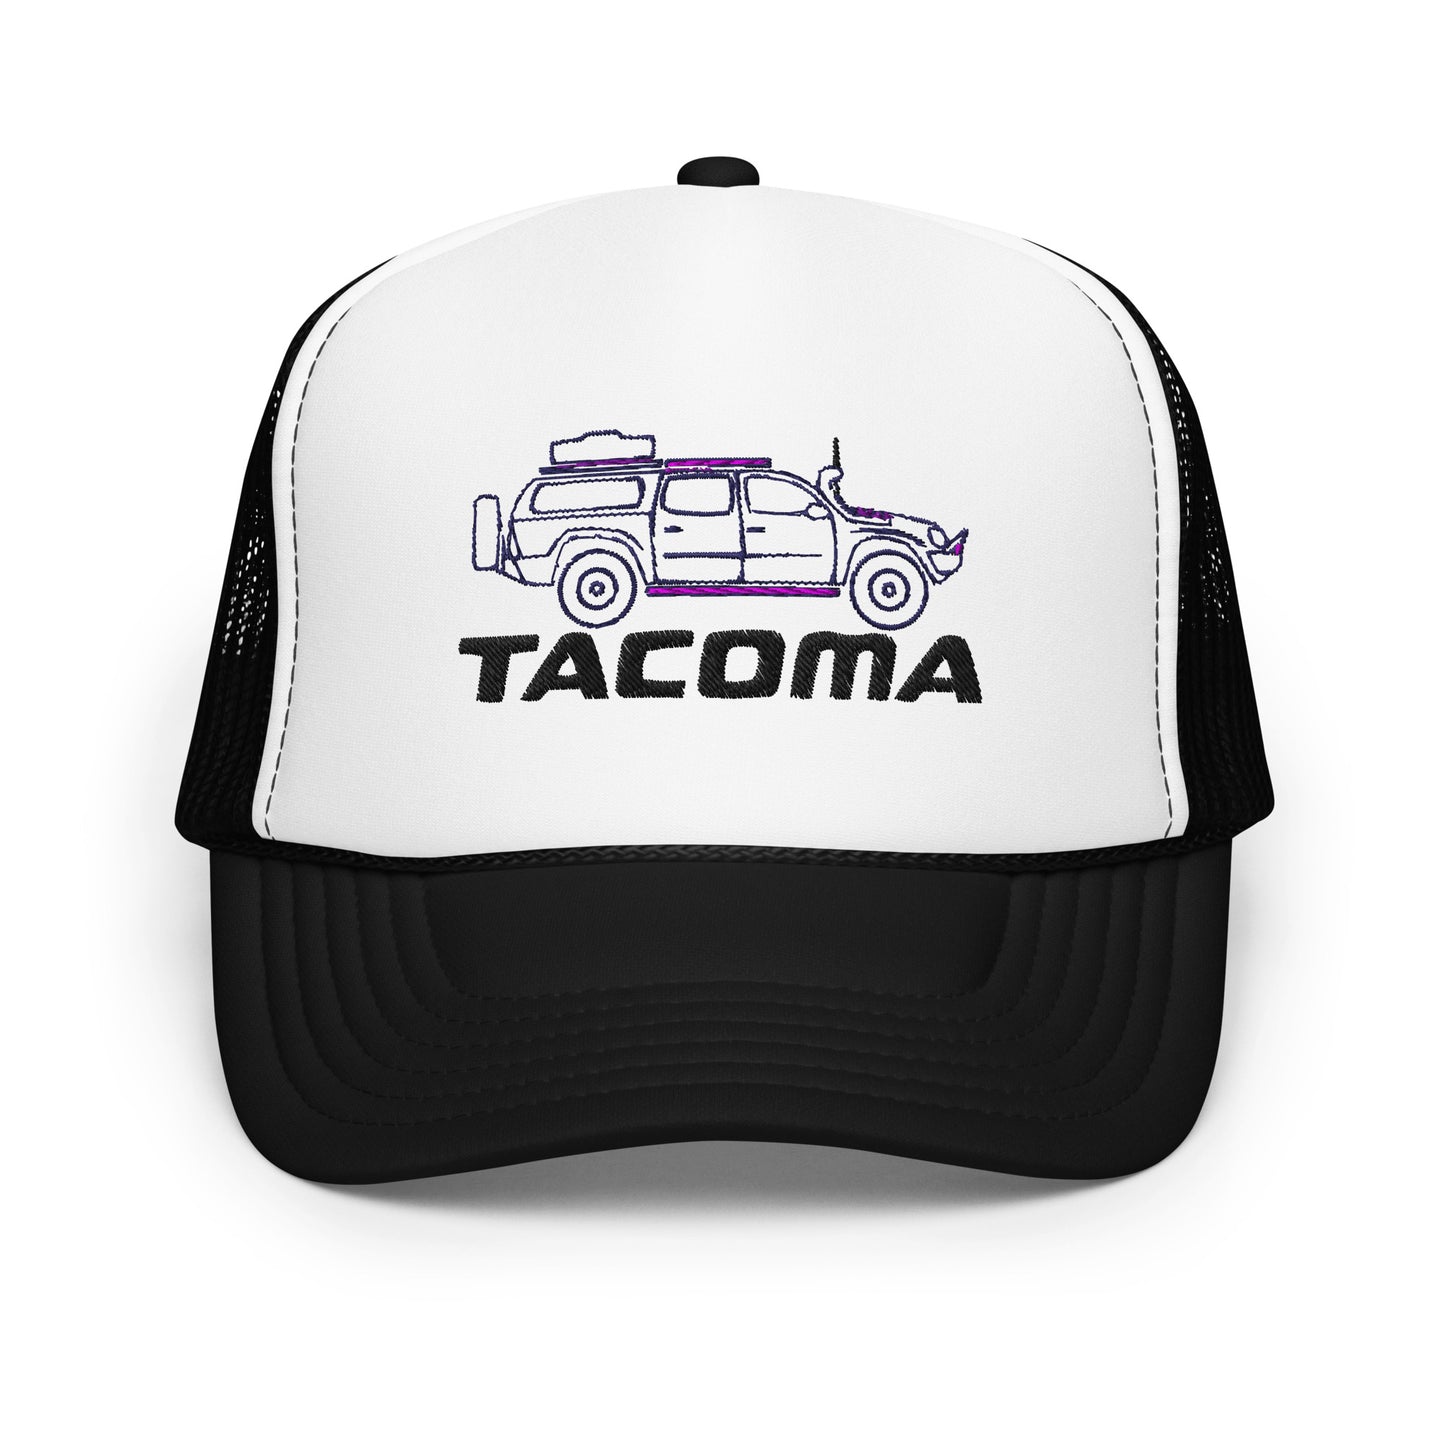 Tacoma Foam Trucker Hat.